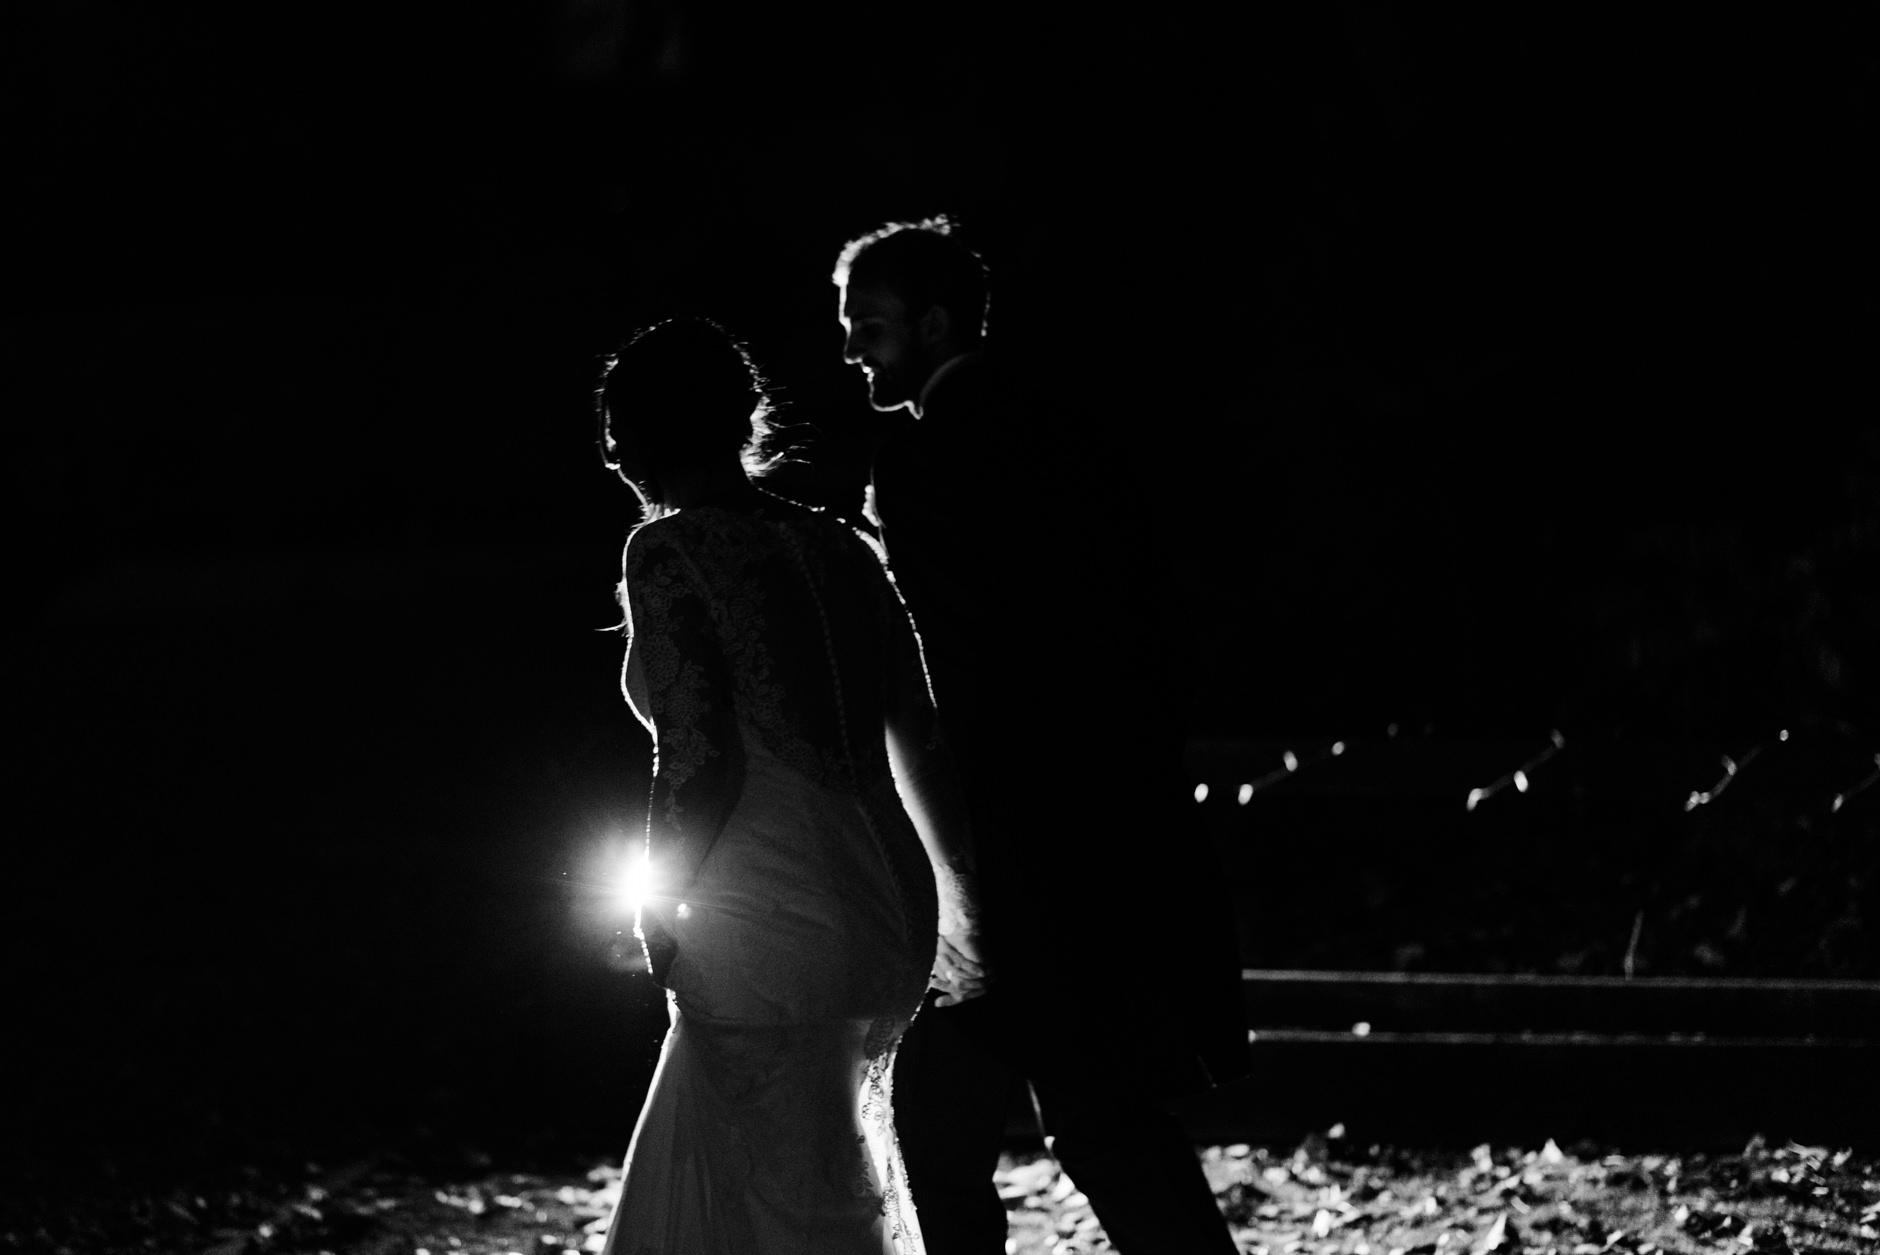 Rim light around the bride and groom at night